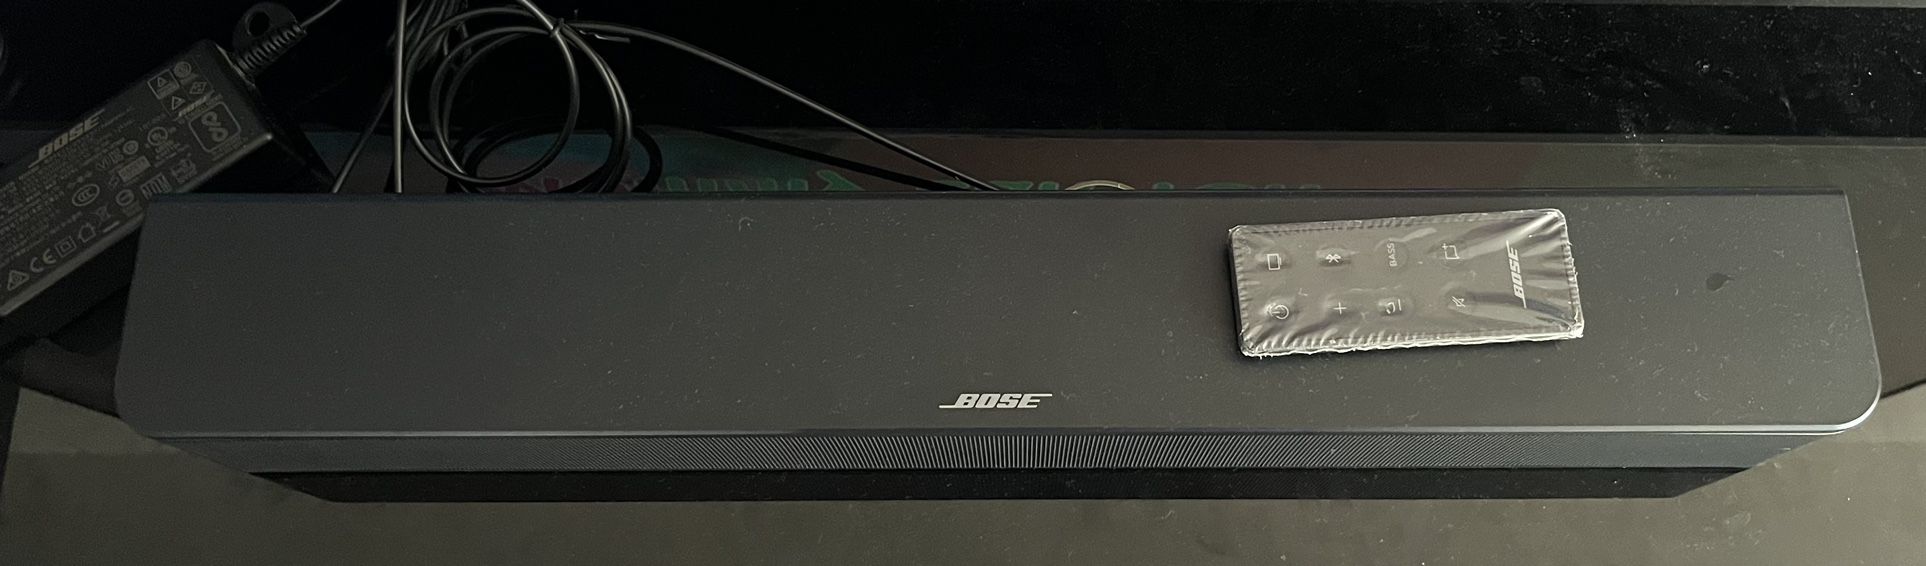 Bose Solo Soundbar Series II - Black